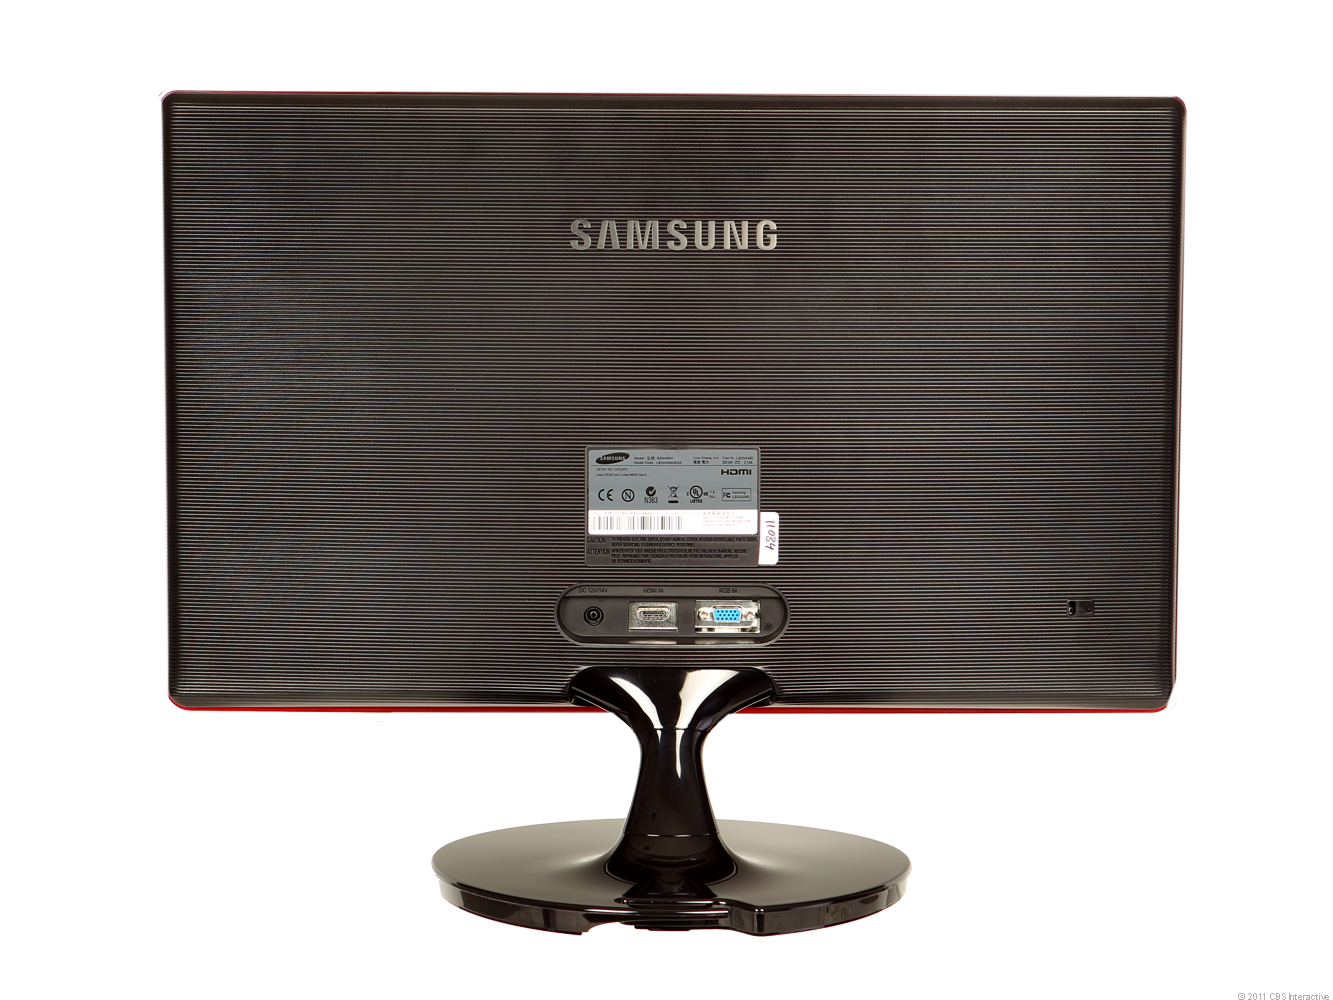 Samsung 23. Монитор Samsung s23a350h. Samsung sa350 Master. Samsung SYNCMASTER sa350. Samsung SYNCMASTER t23b350.